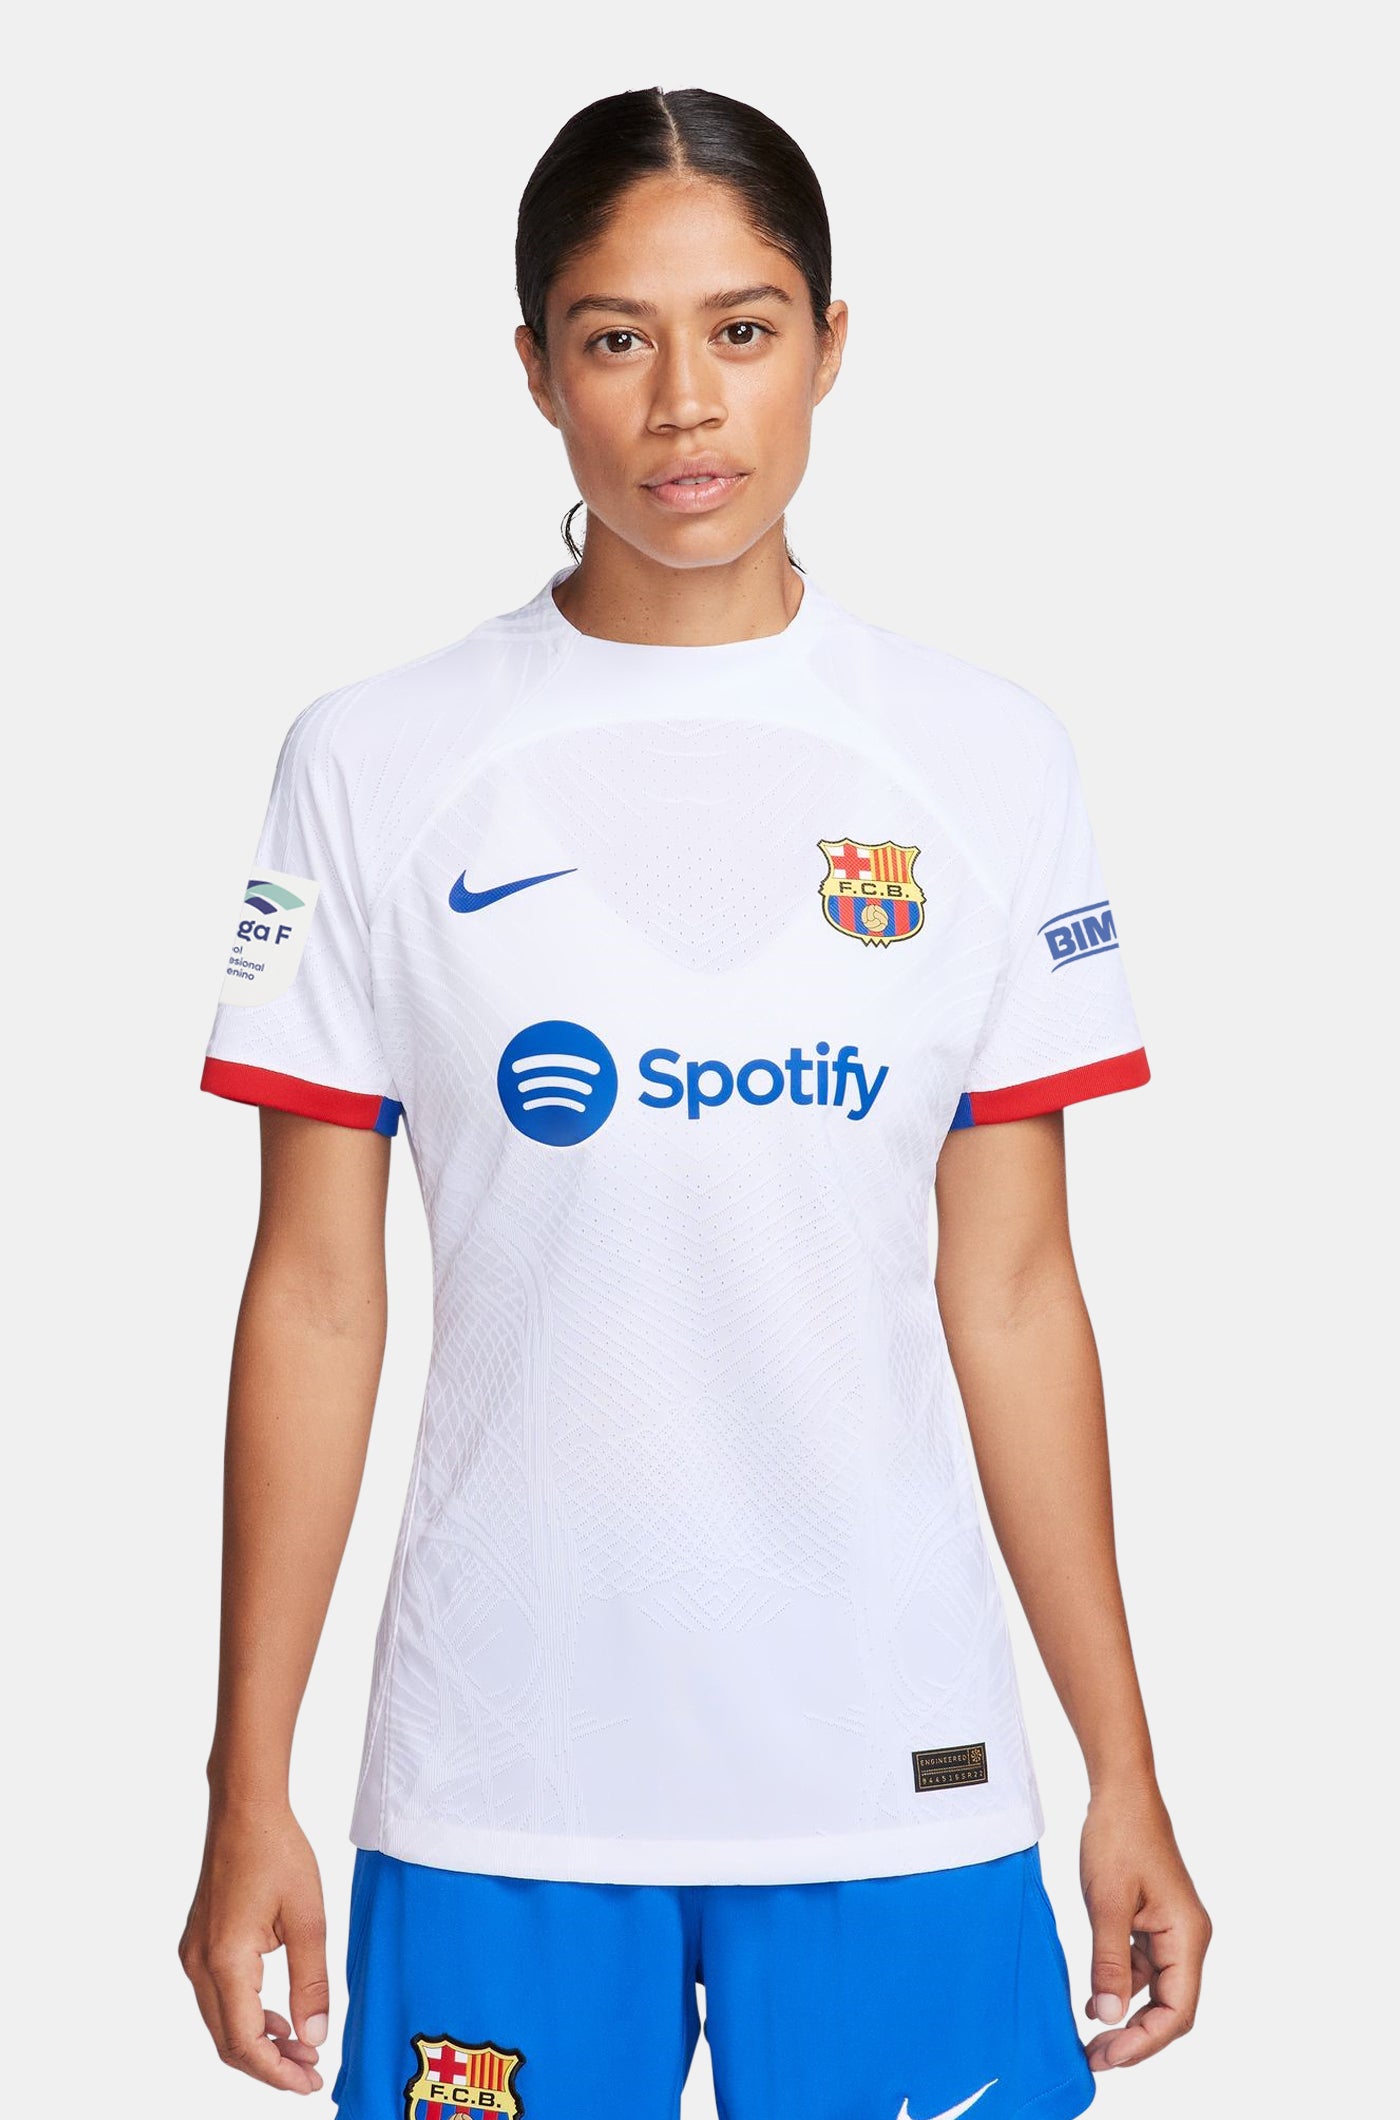 Liga F FC Barcelona Away Shirt 23/24 Player’s Edition - Women  - MARTA